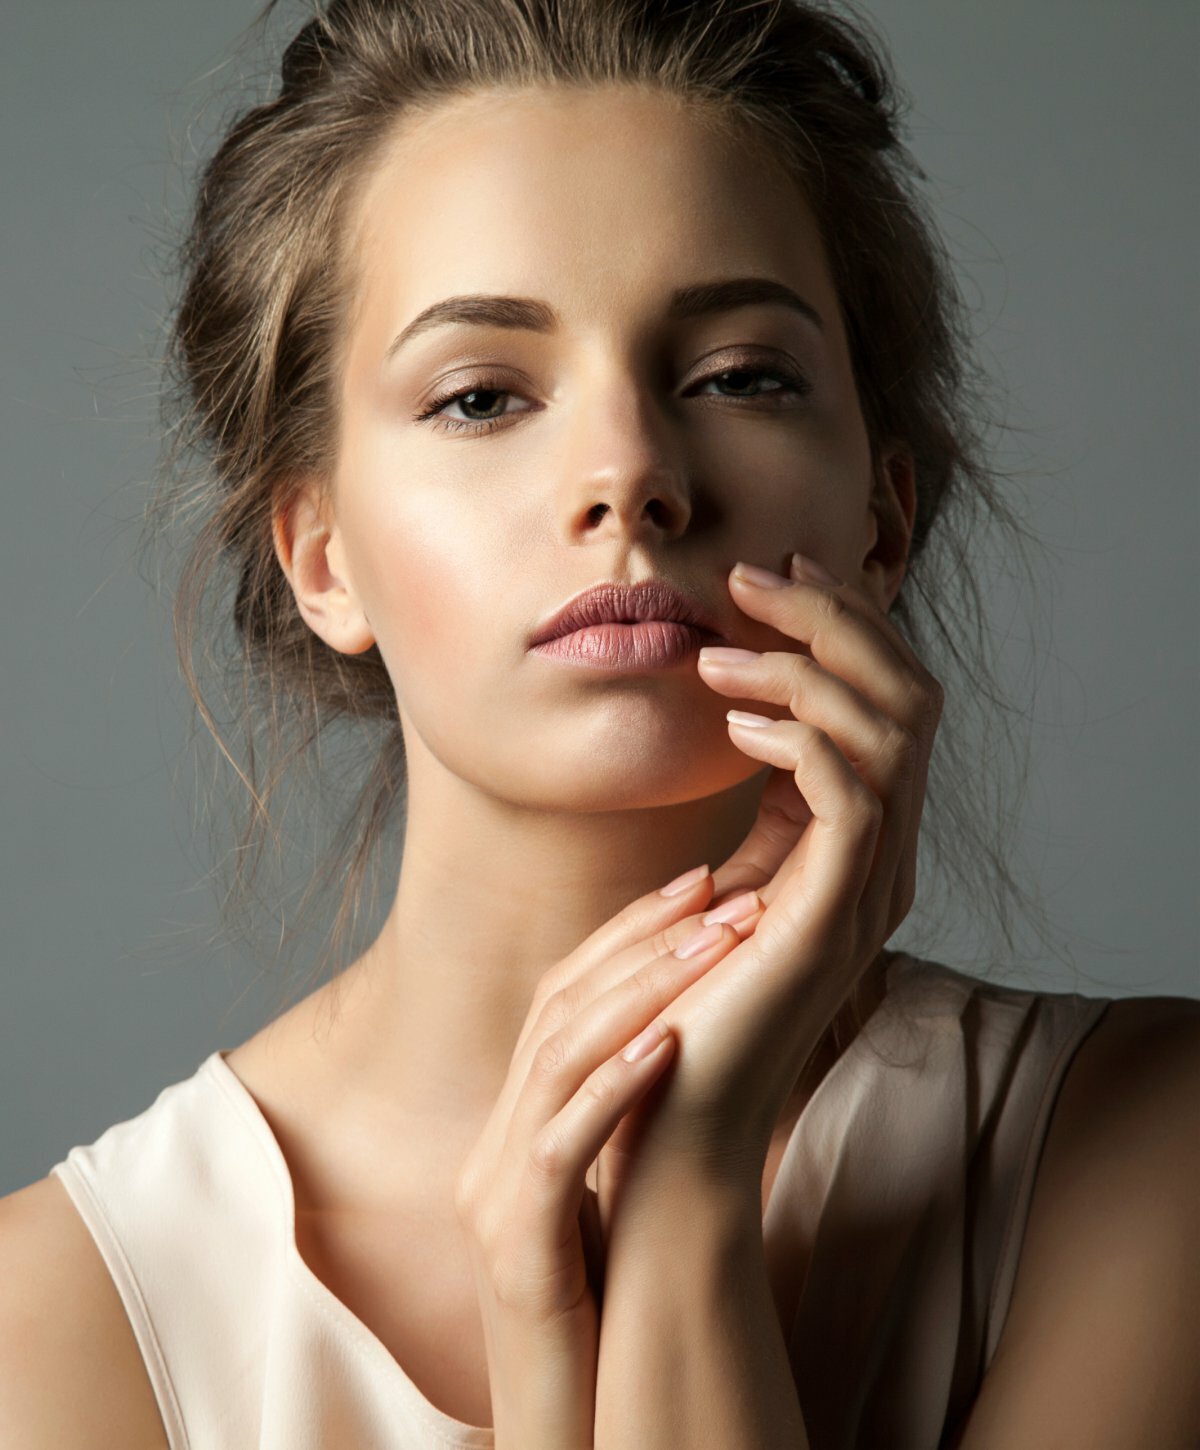 New York botox model touching face